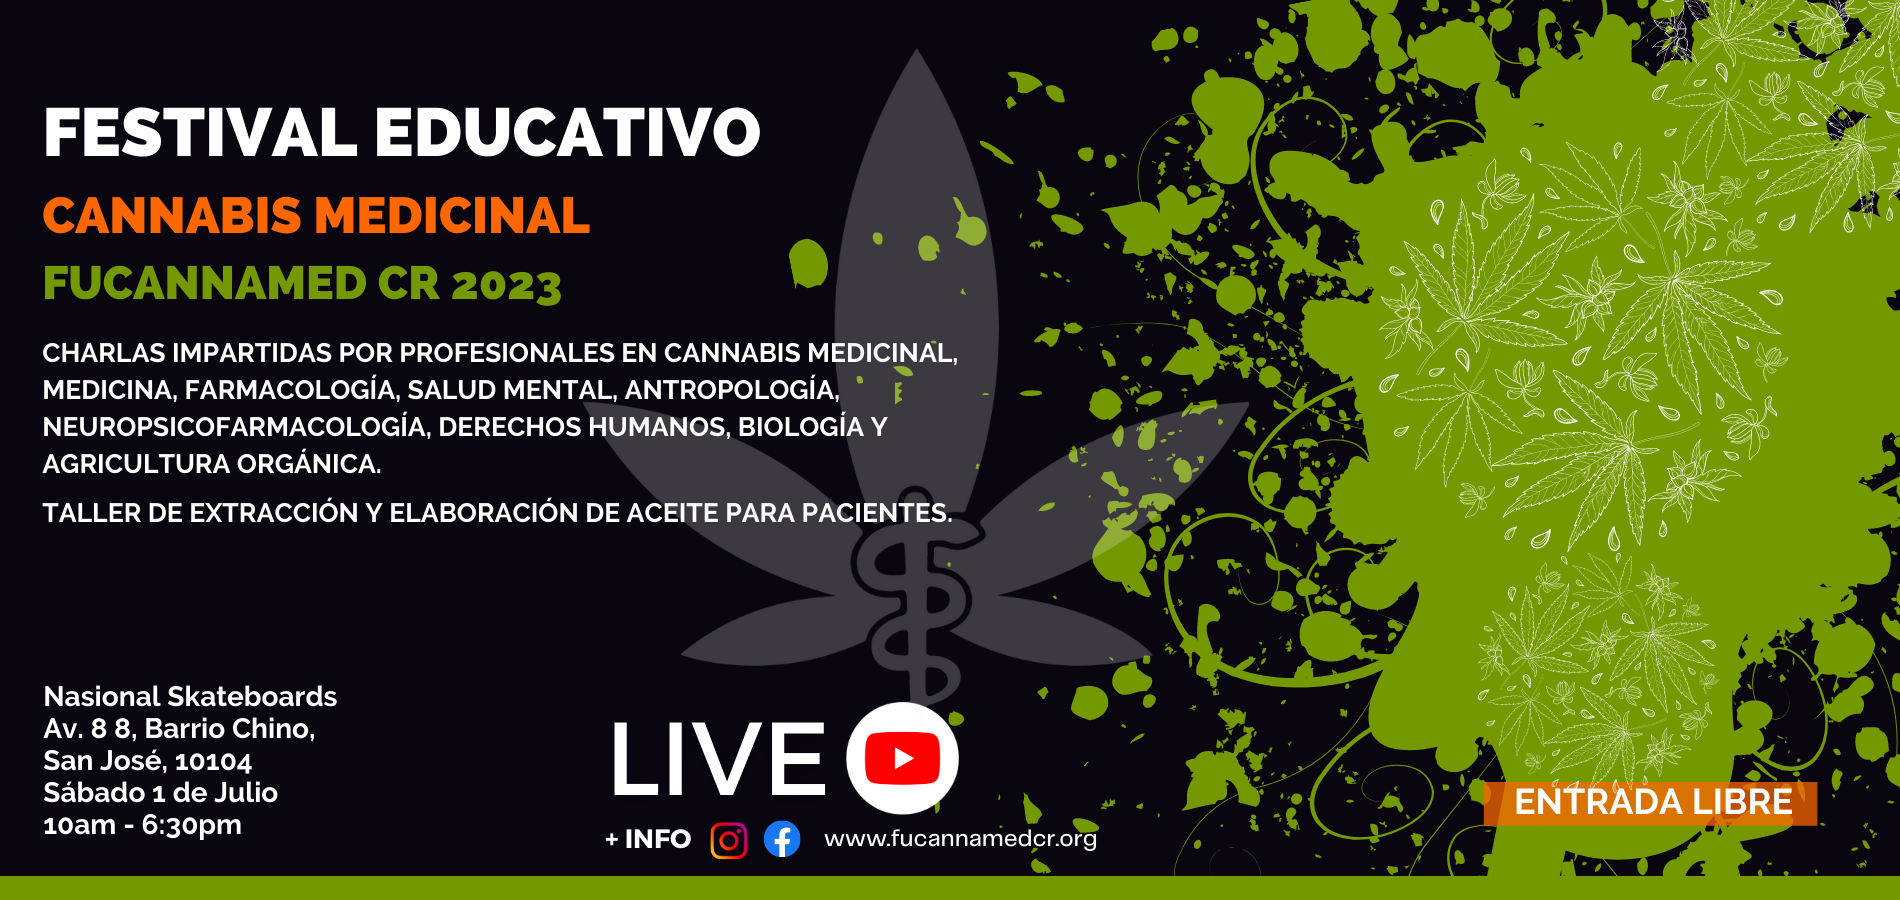 cannabidiol cannabinoide Cannabis fucannamedcr medicinal natural organico comunidad